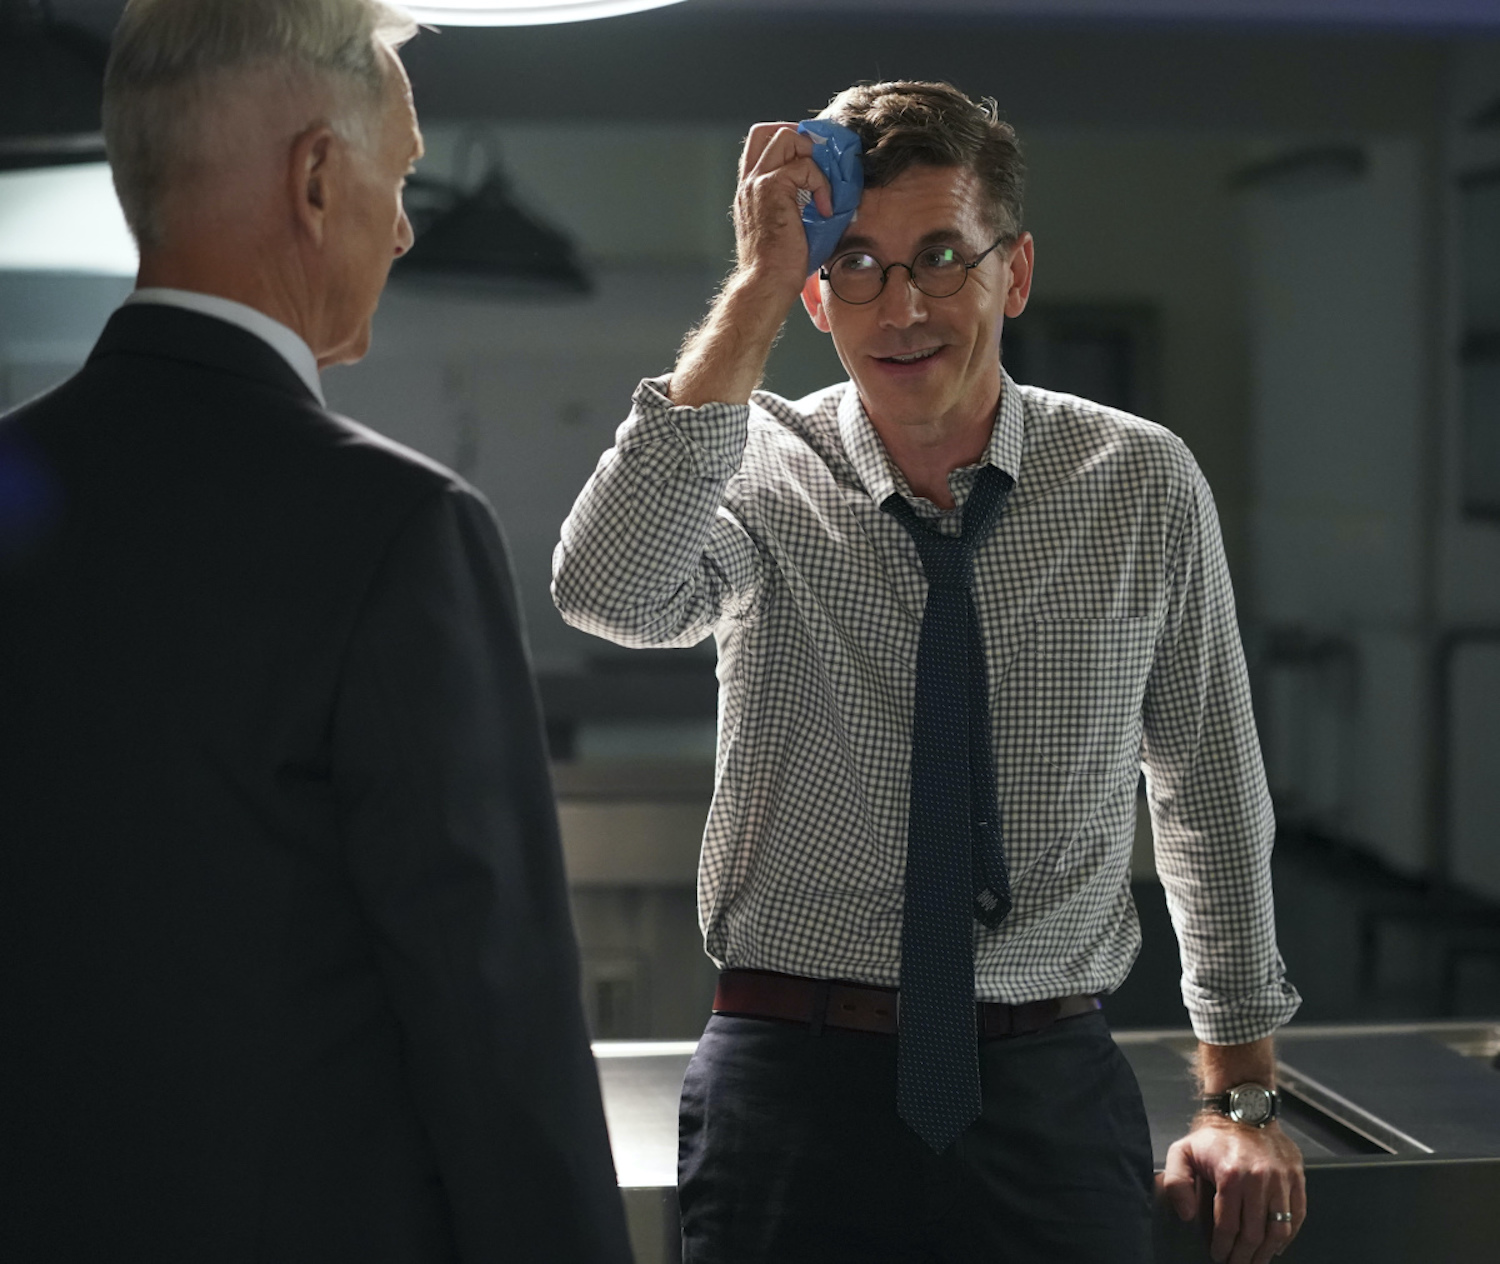 Brian Dietzen as Palmer with Mark Harmon as Gibbs in NCIS - Season 18 Premiere